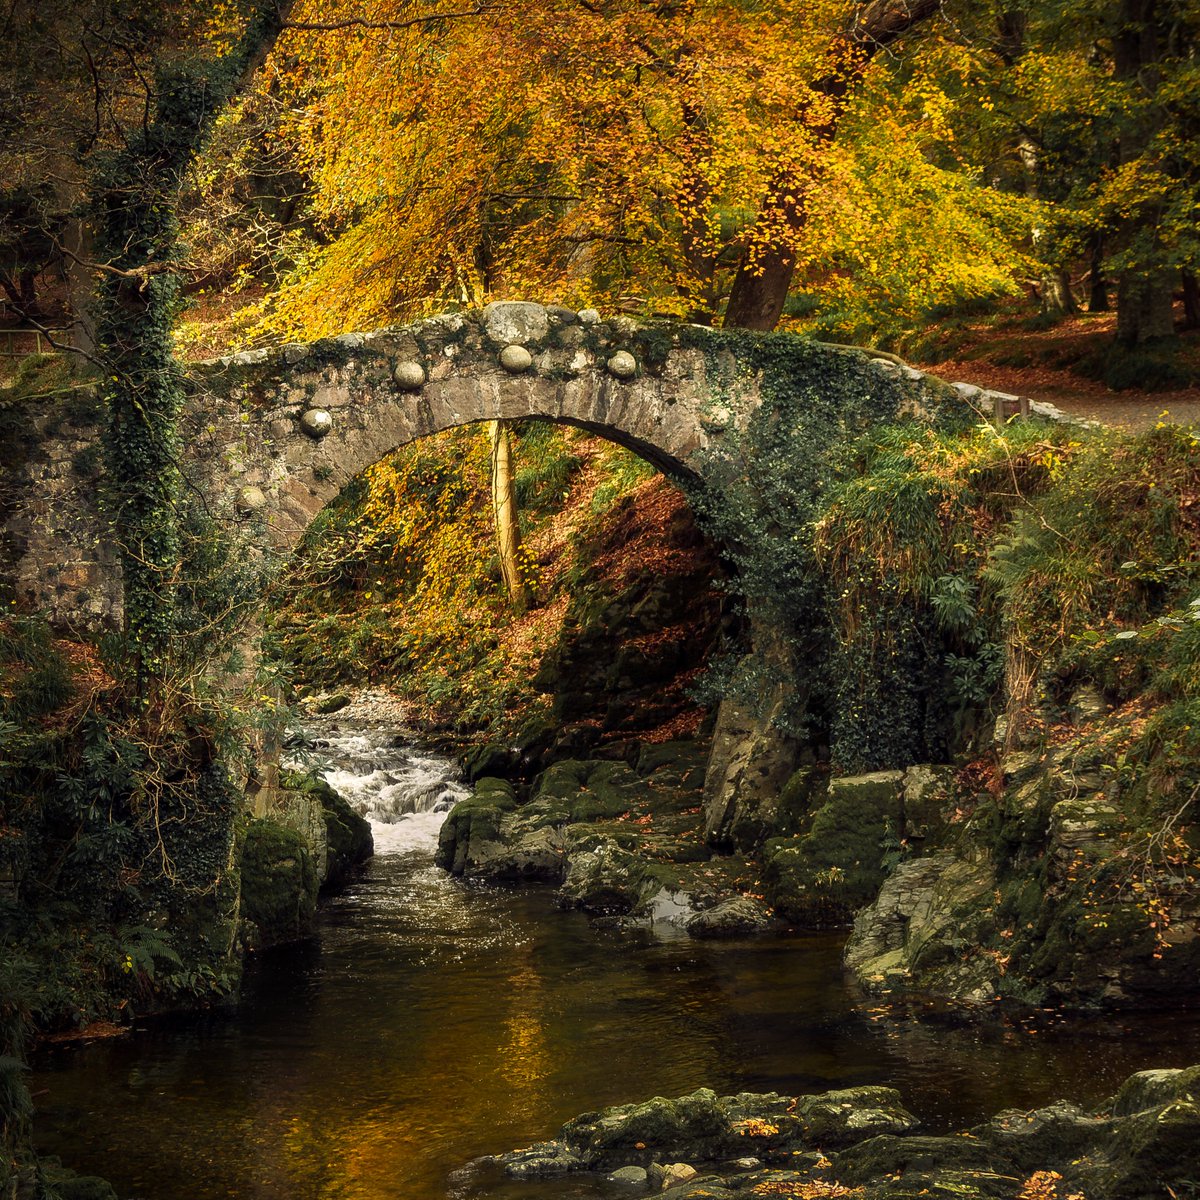 Foley's Bridge in Tollymore Forest, as seen in Game of Thrones.

@ThePhotoHour @the_full_irish_ @theirelandguide @GoToIrelandUS @TourismIreland @TourismNIreland @PictureIreland @FollowIreland @Beyond_Antrim @ancienteastIRL